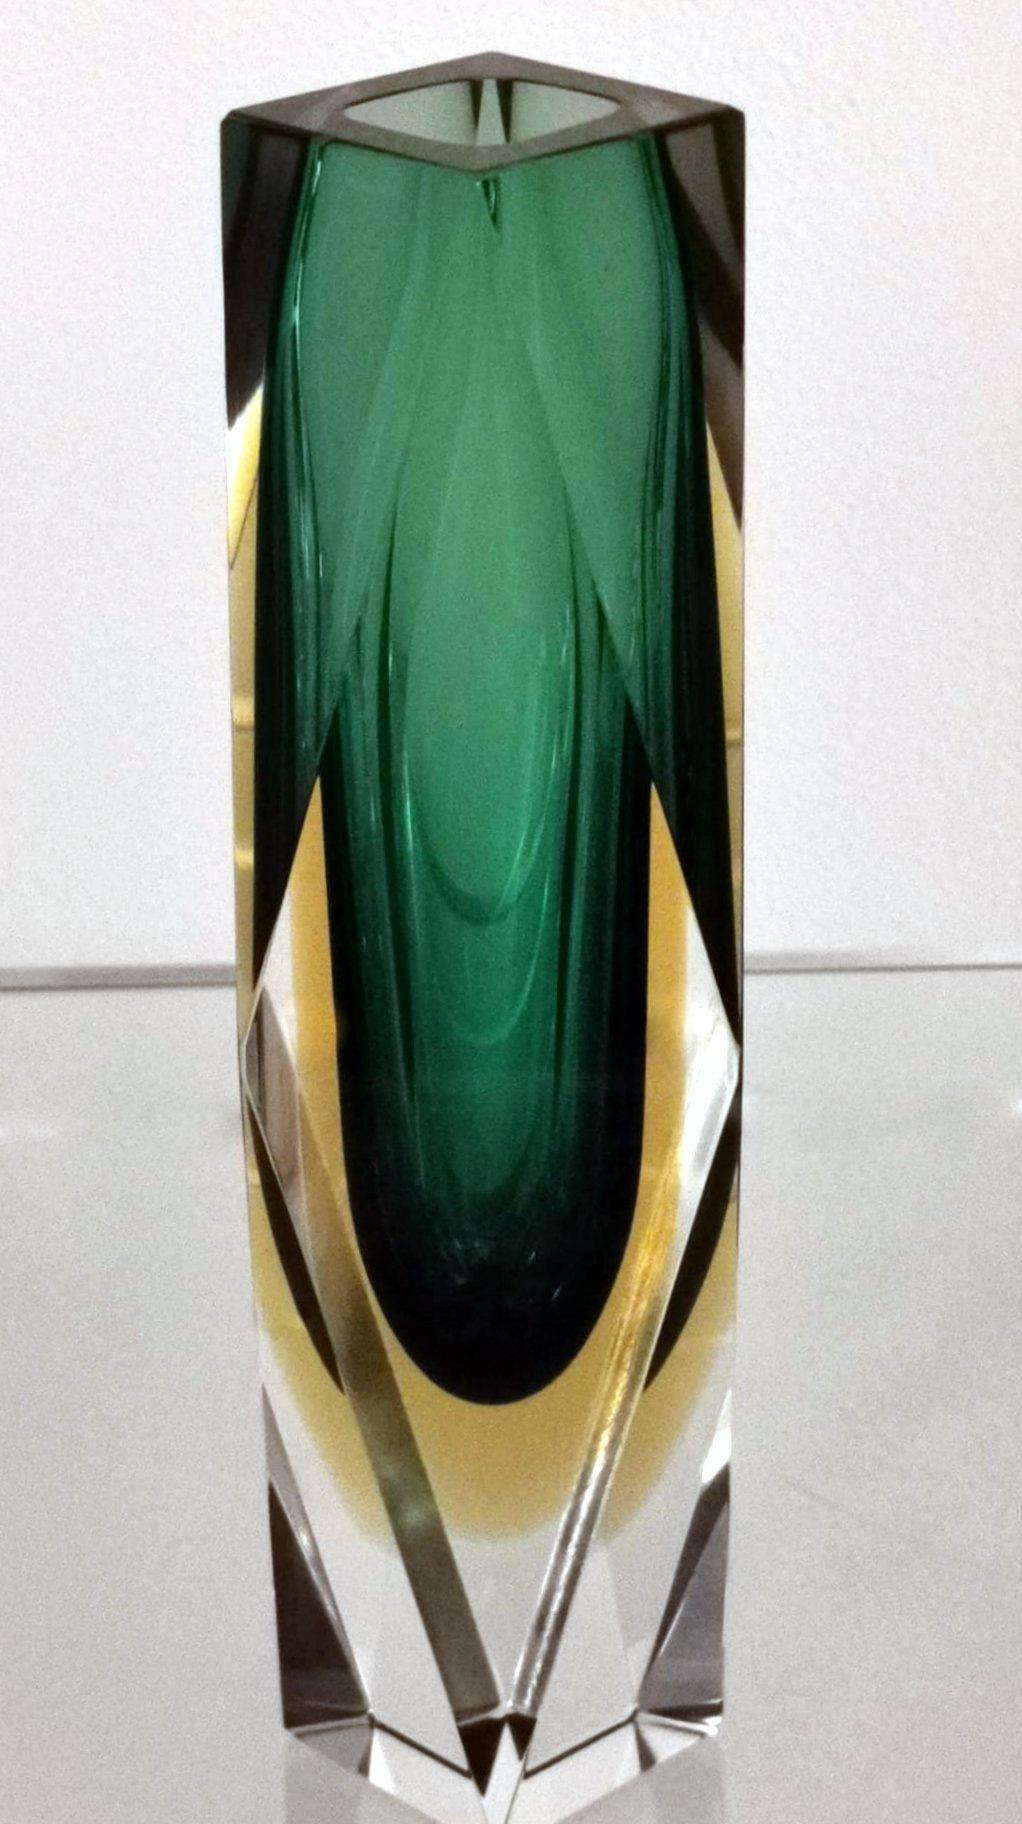 Italian Mandruzzato Murano Glass Vase 